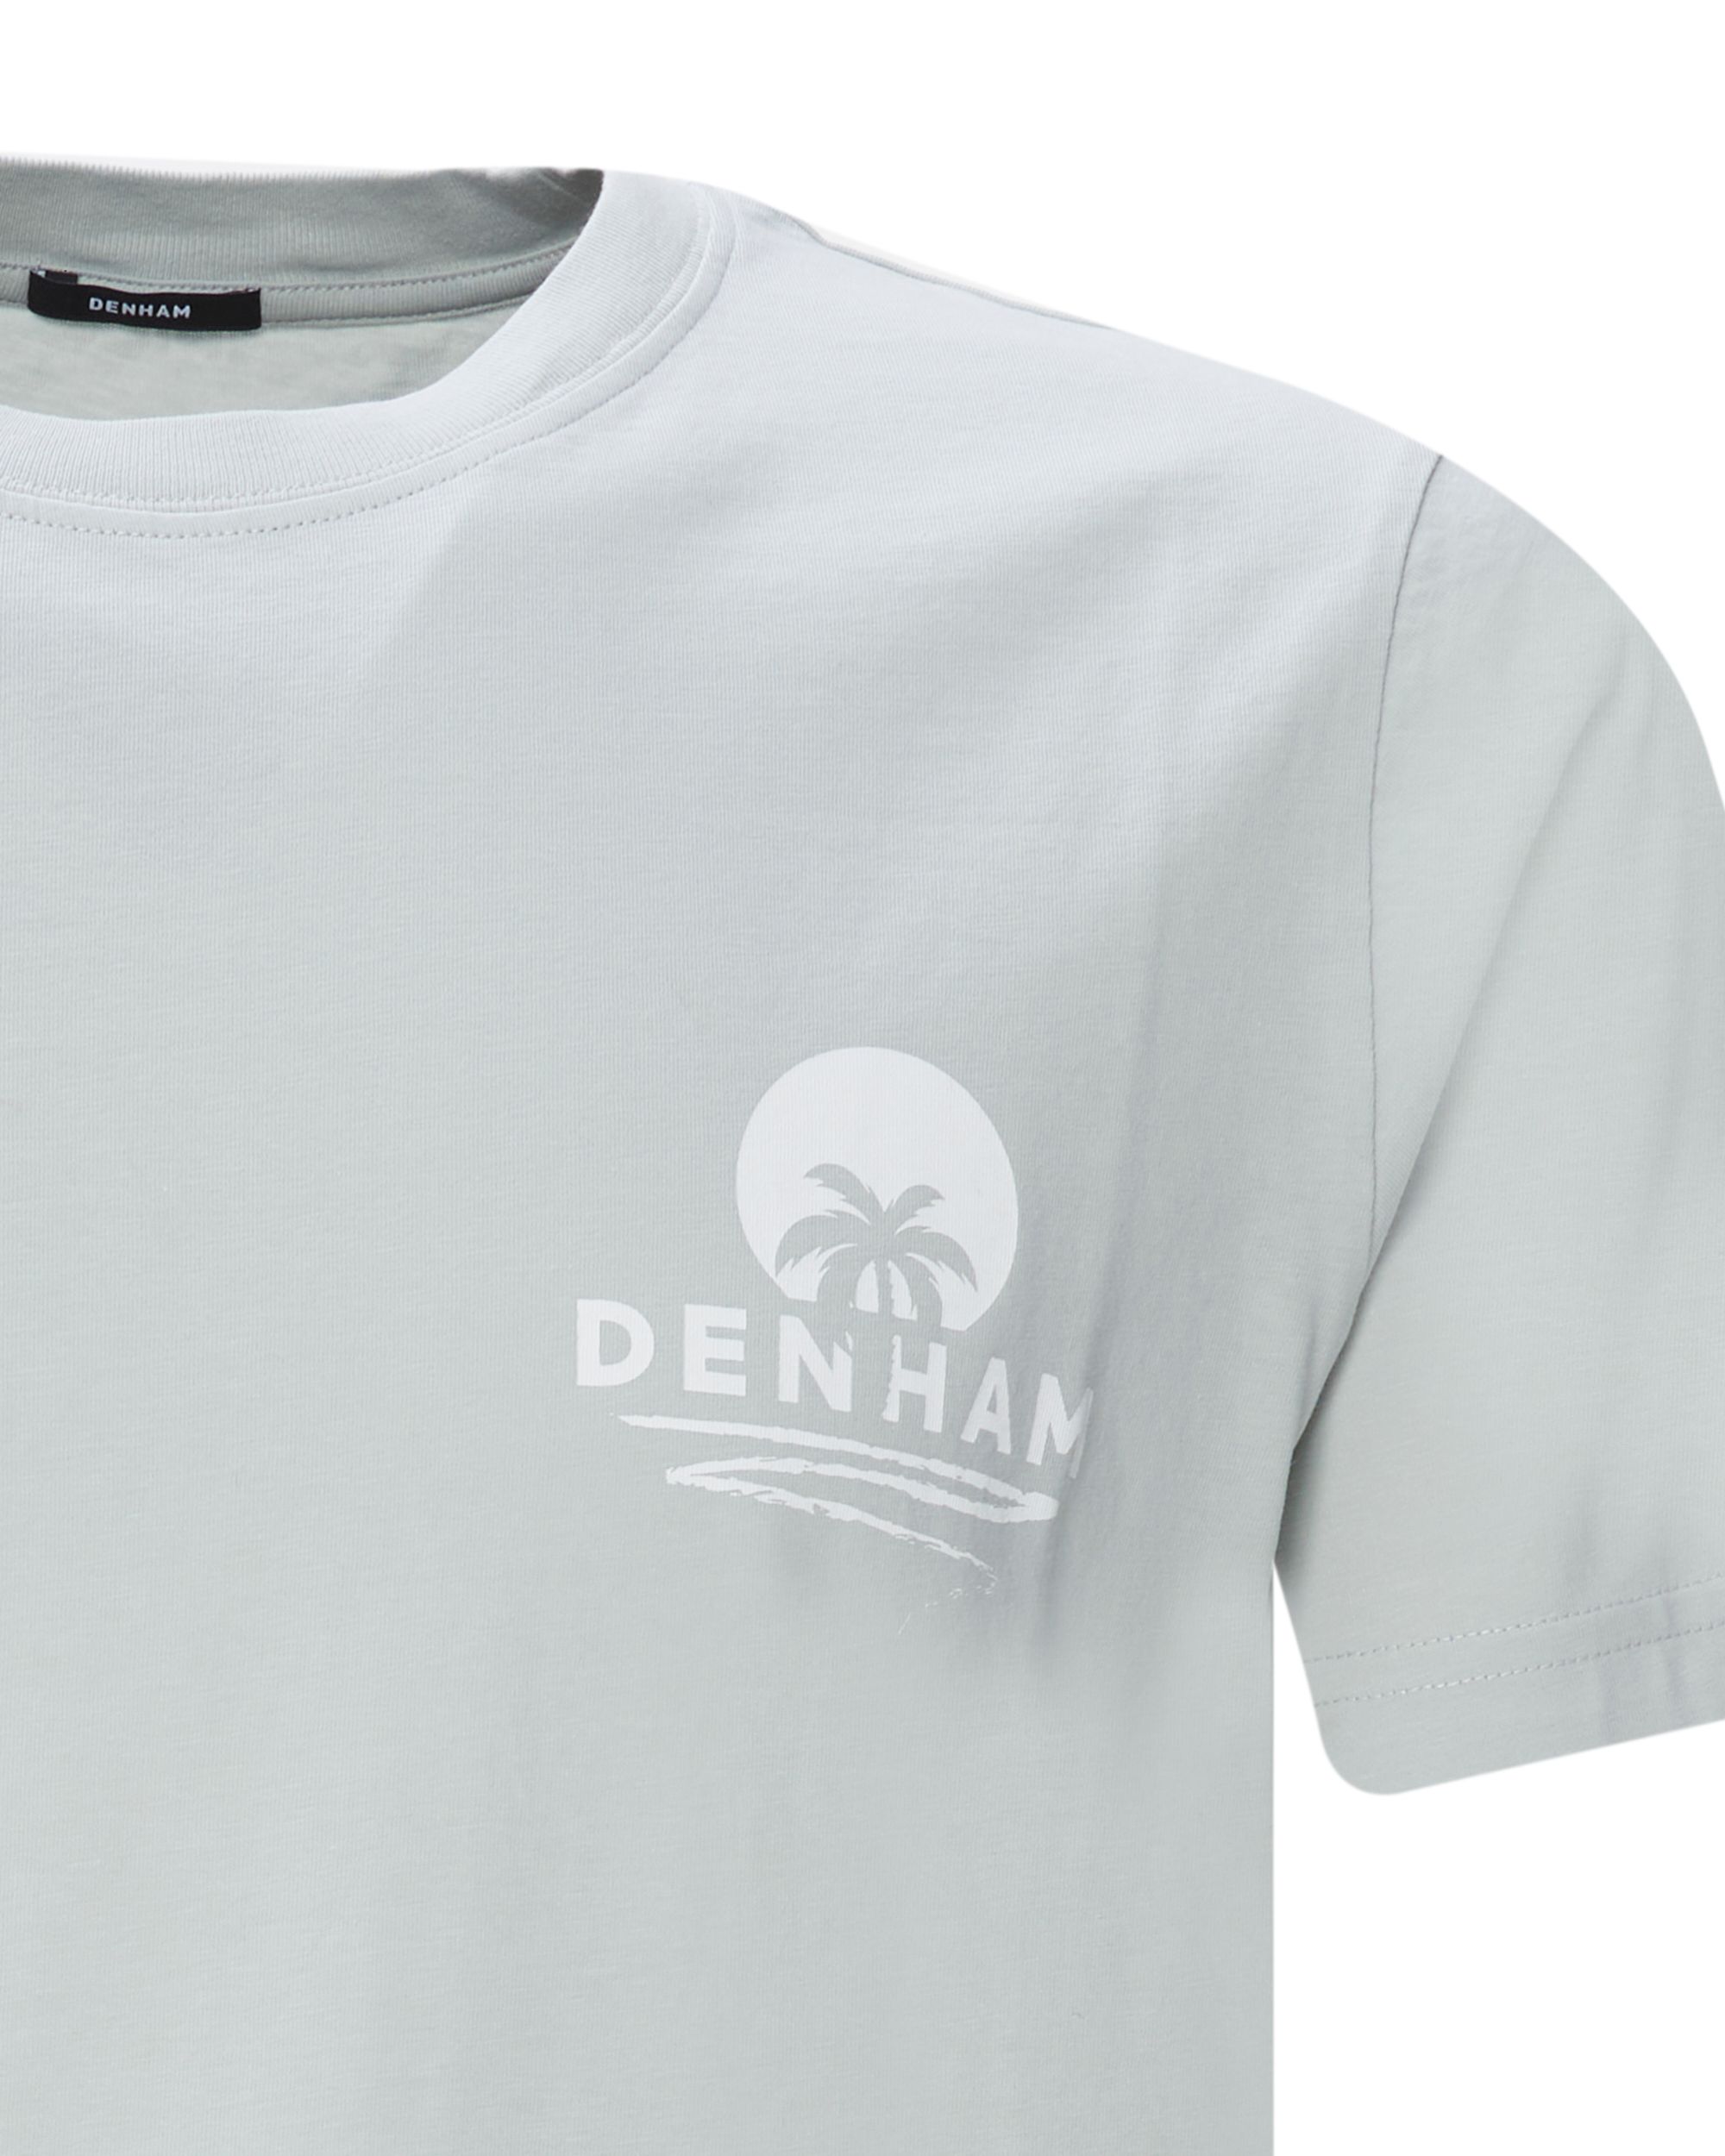 DENHAM Nissi T-shirt KM Licht grijs 081252-001-L